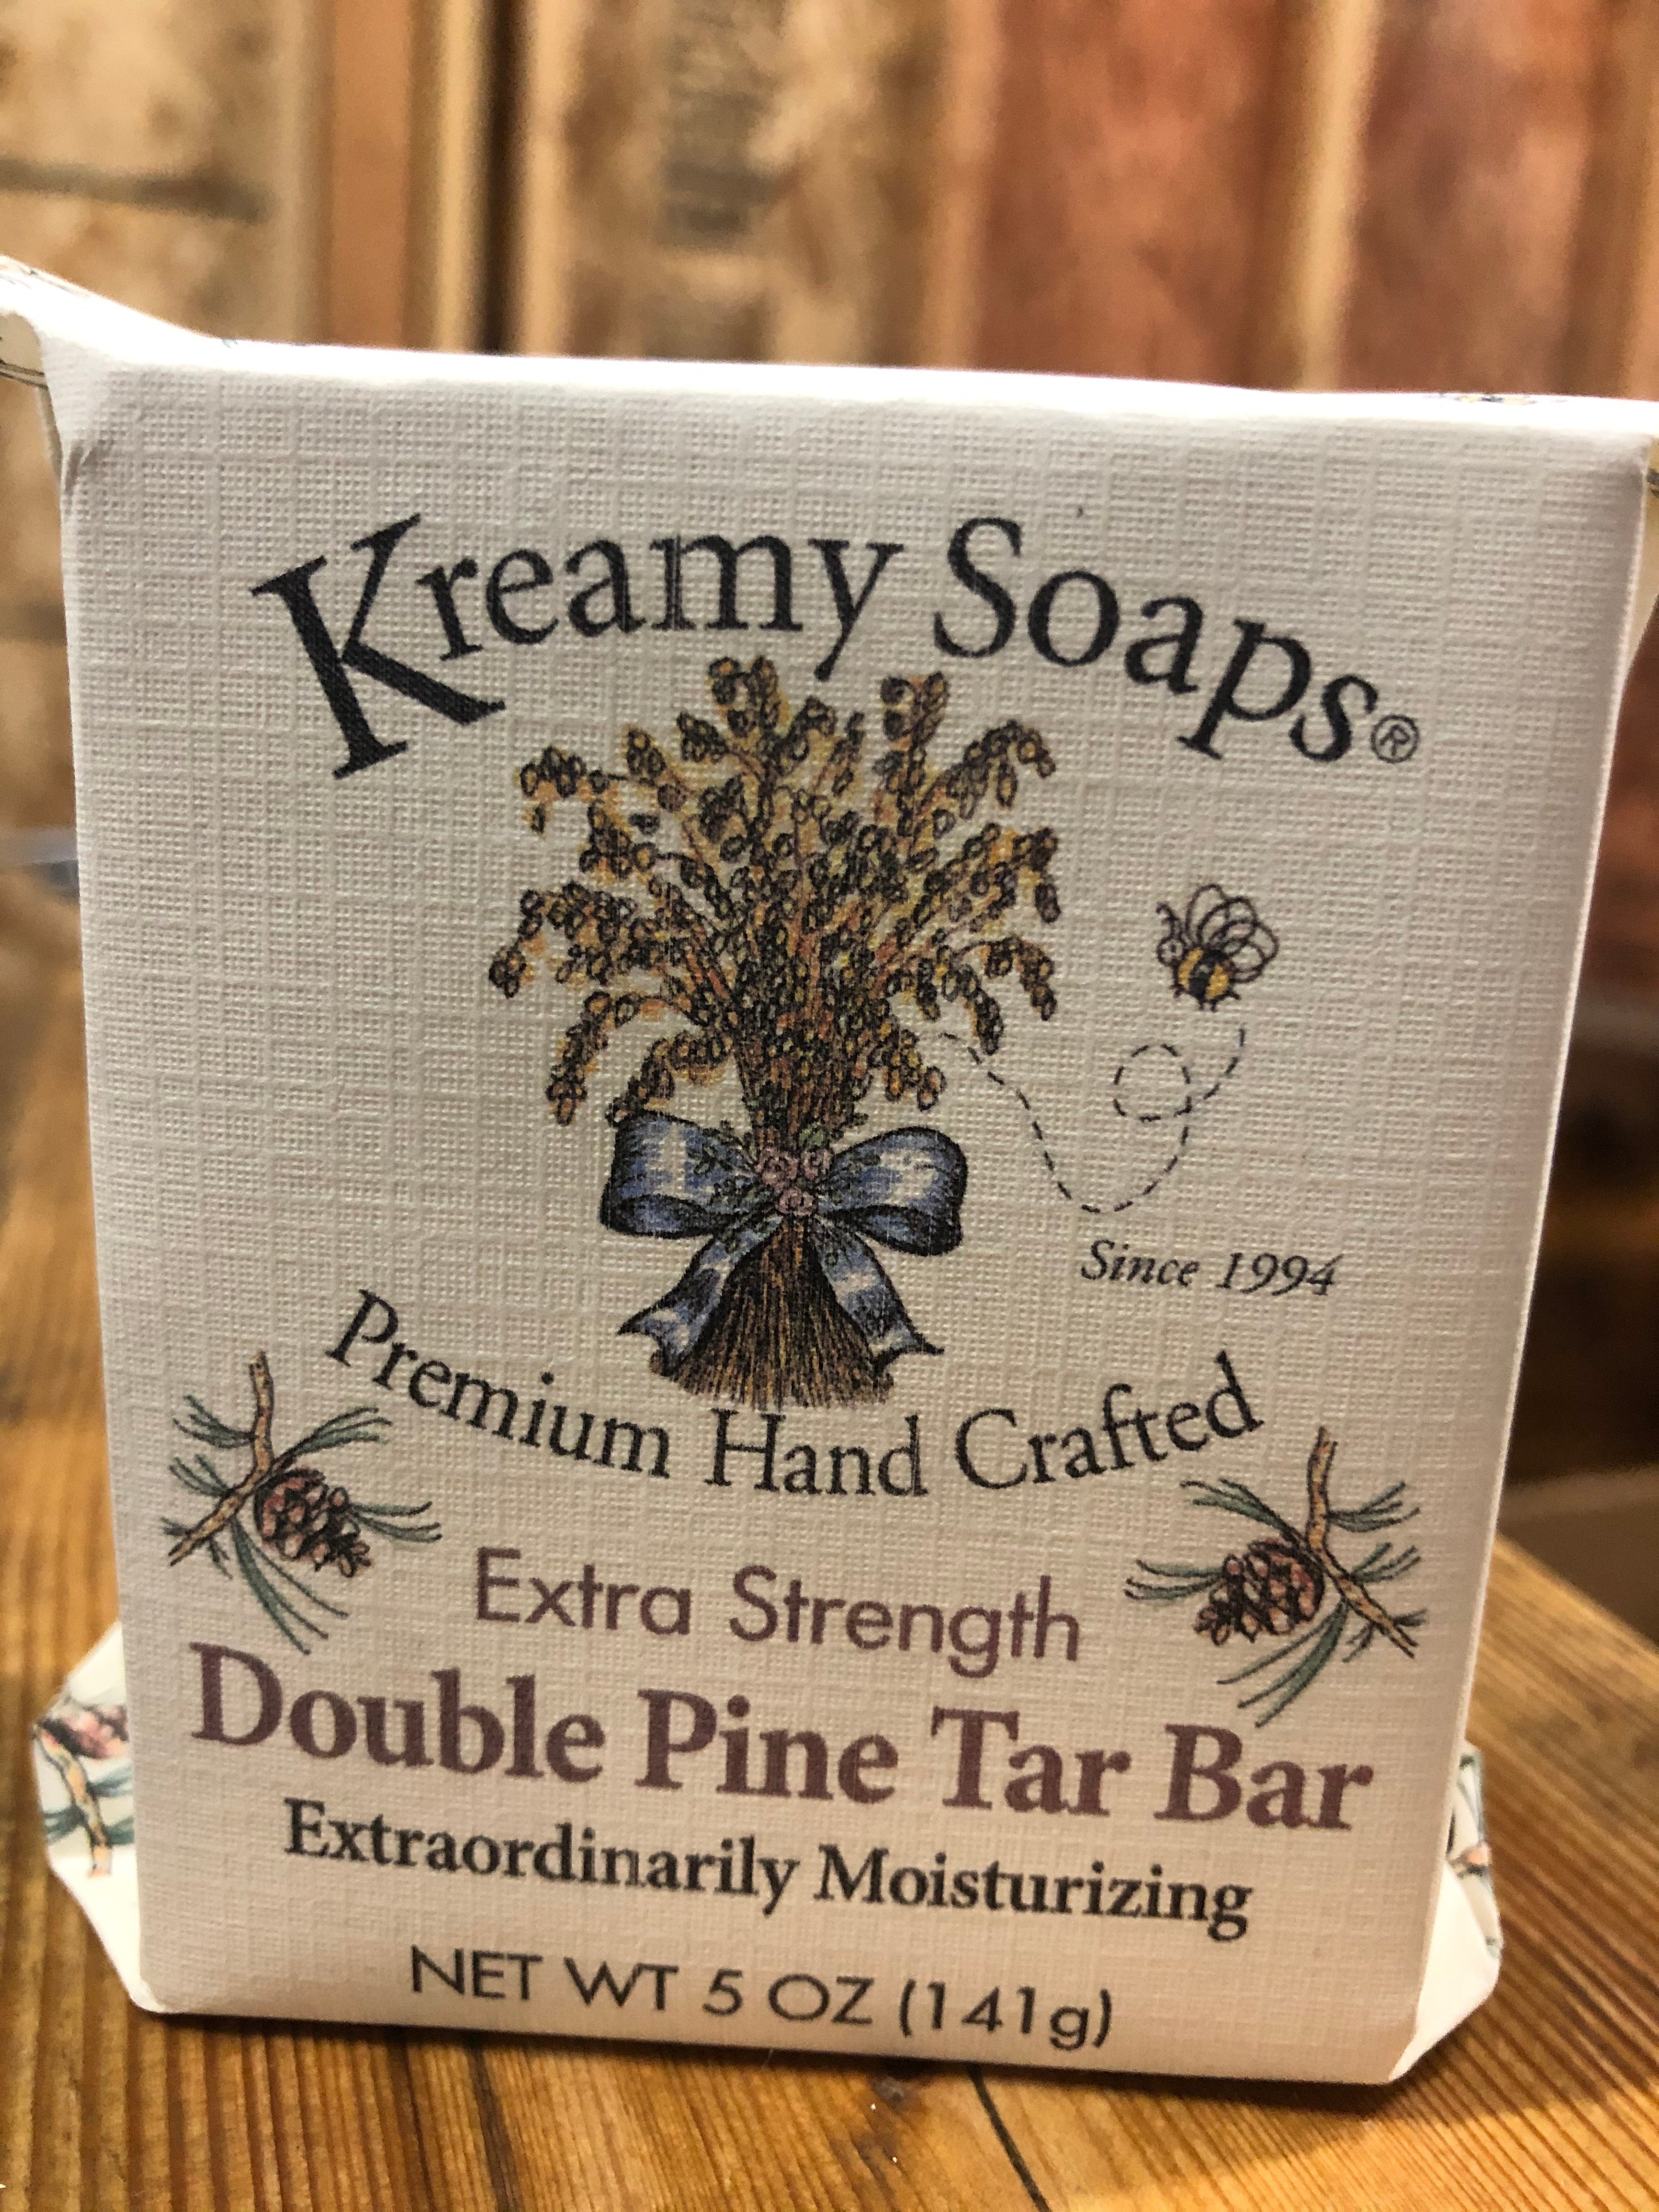 Double Pine Tar - Kreamy Soaps